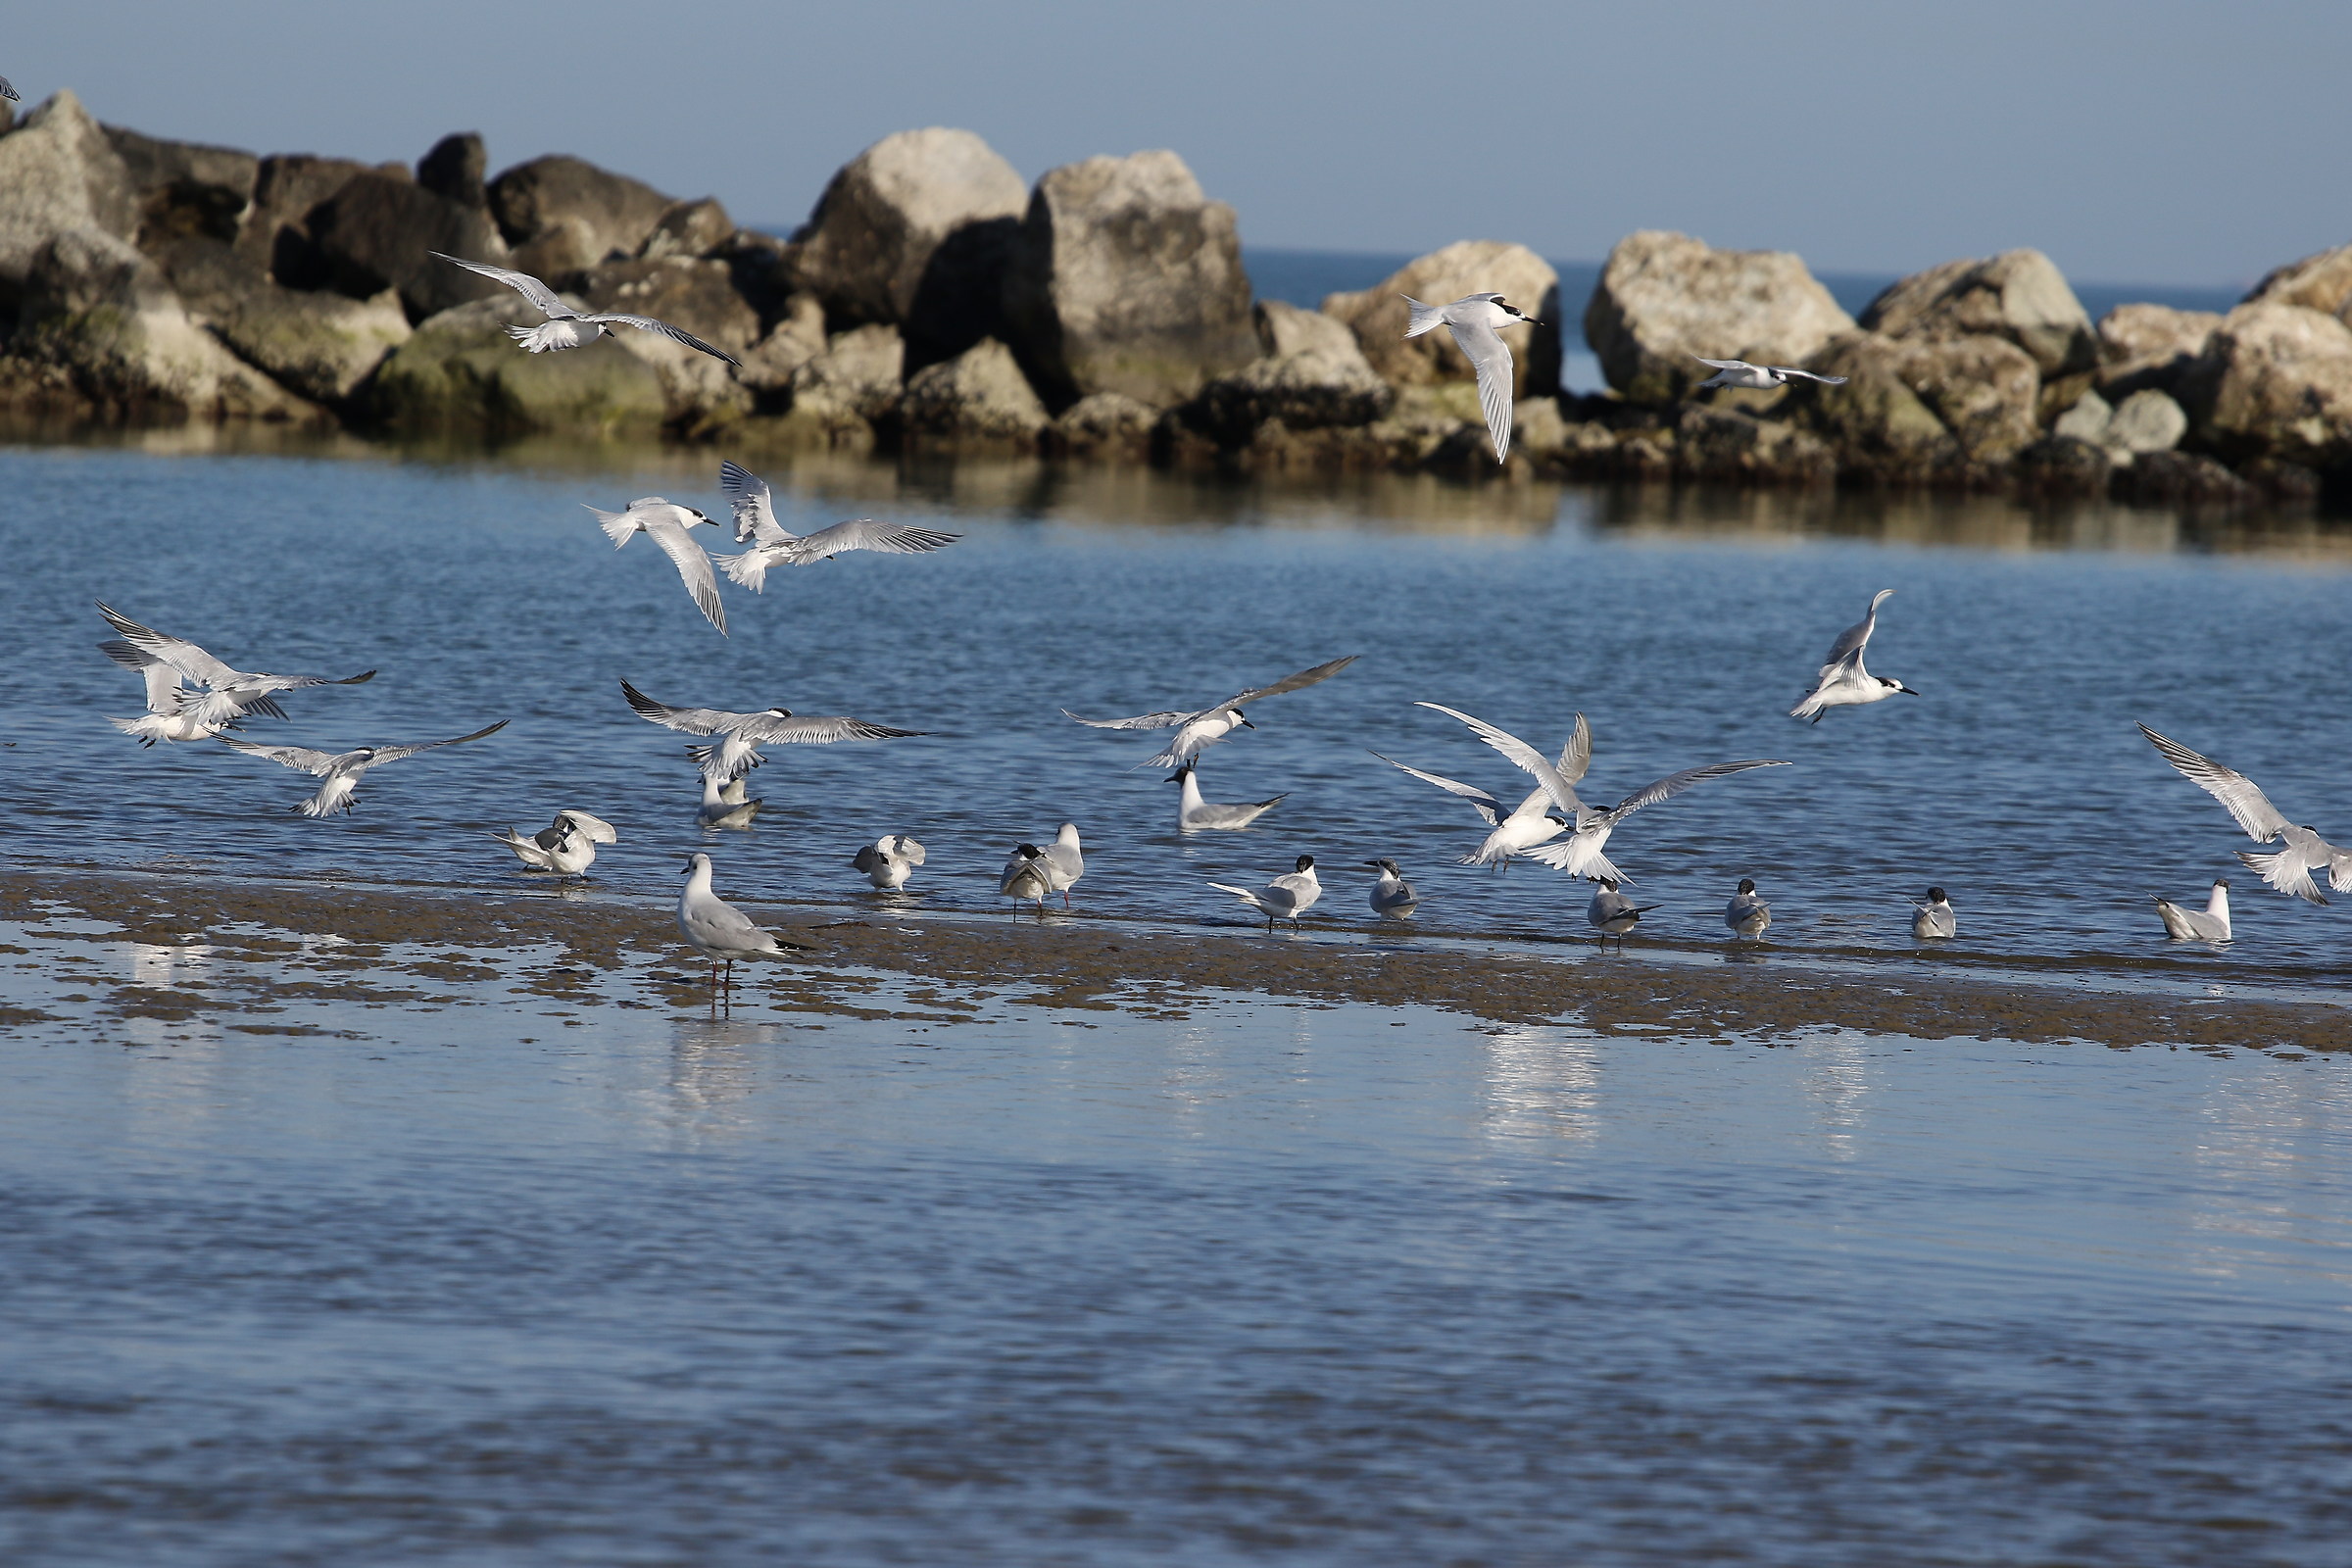 Terns and gulls...